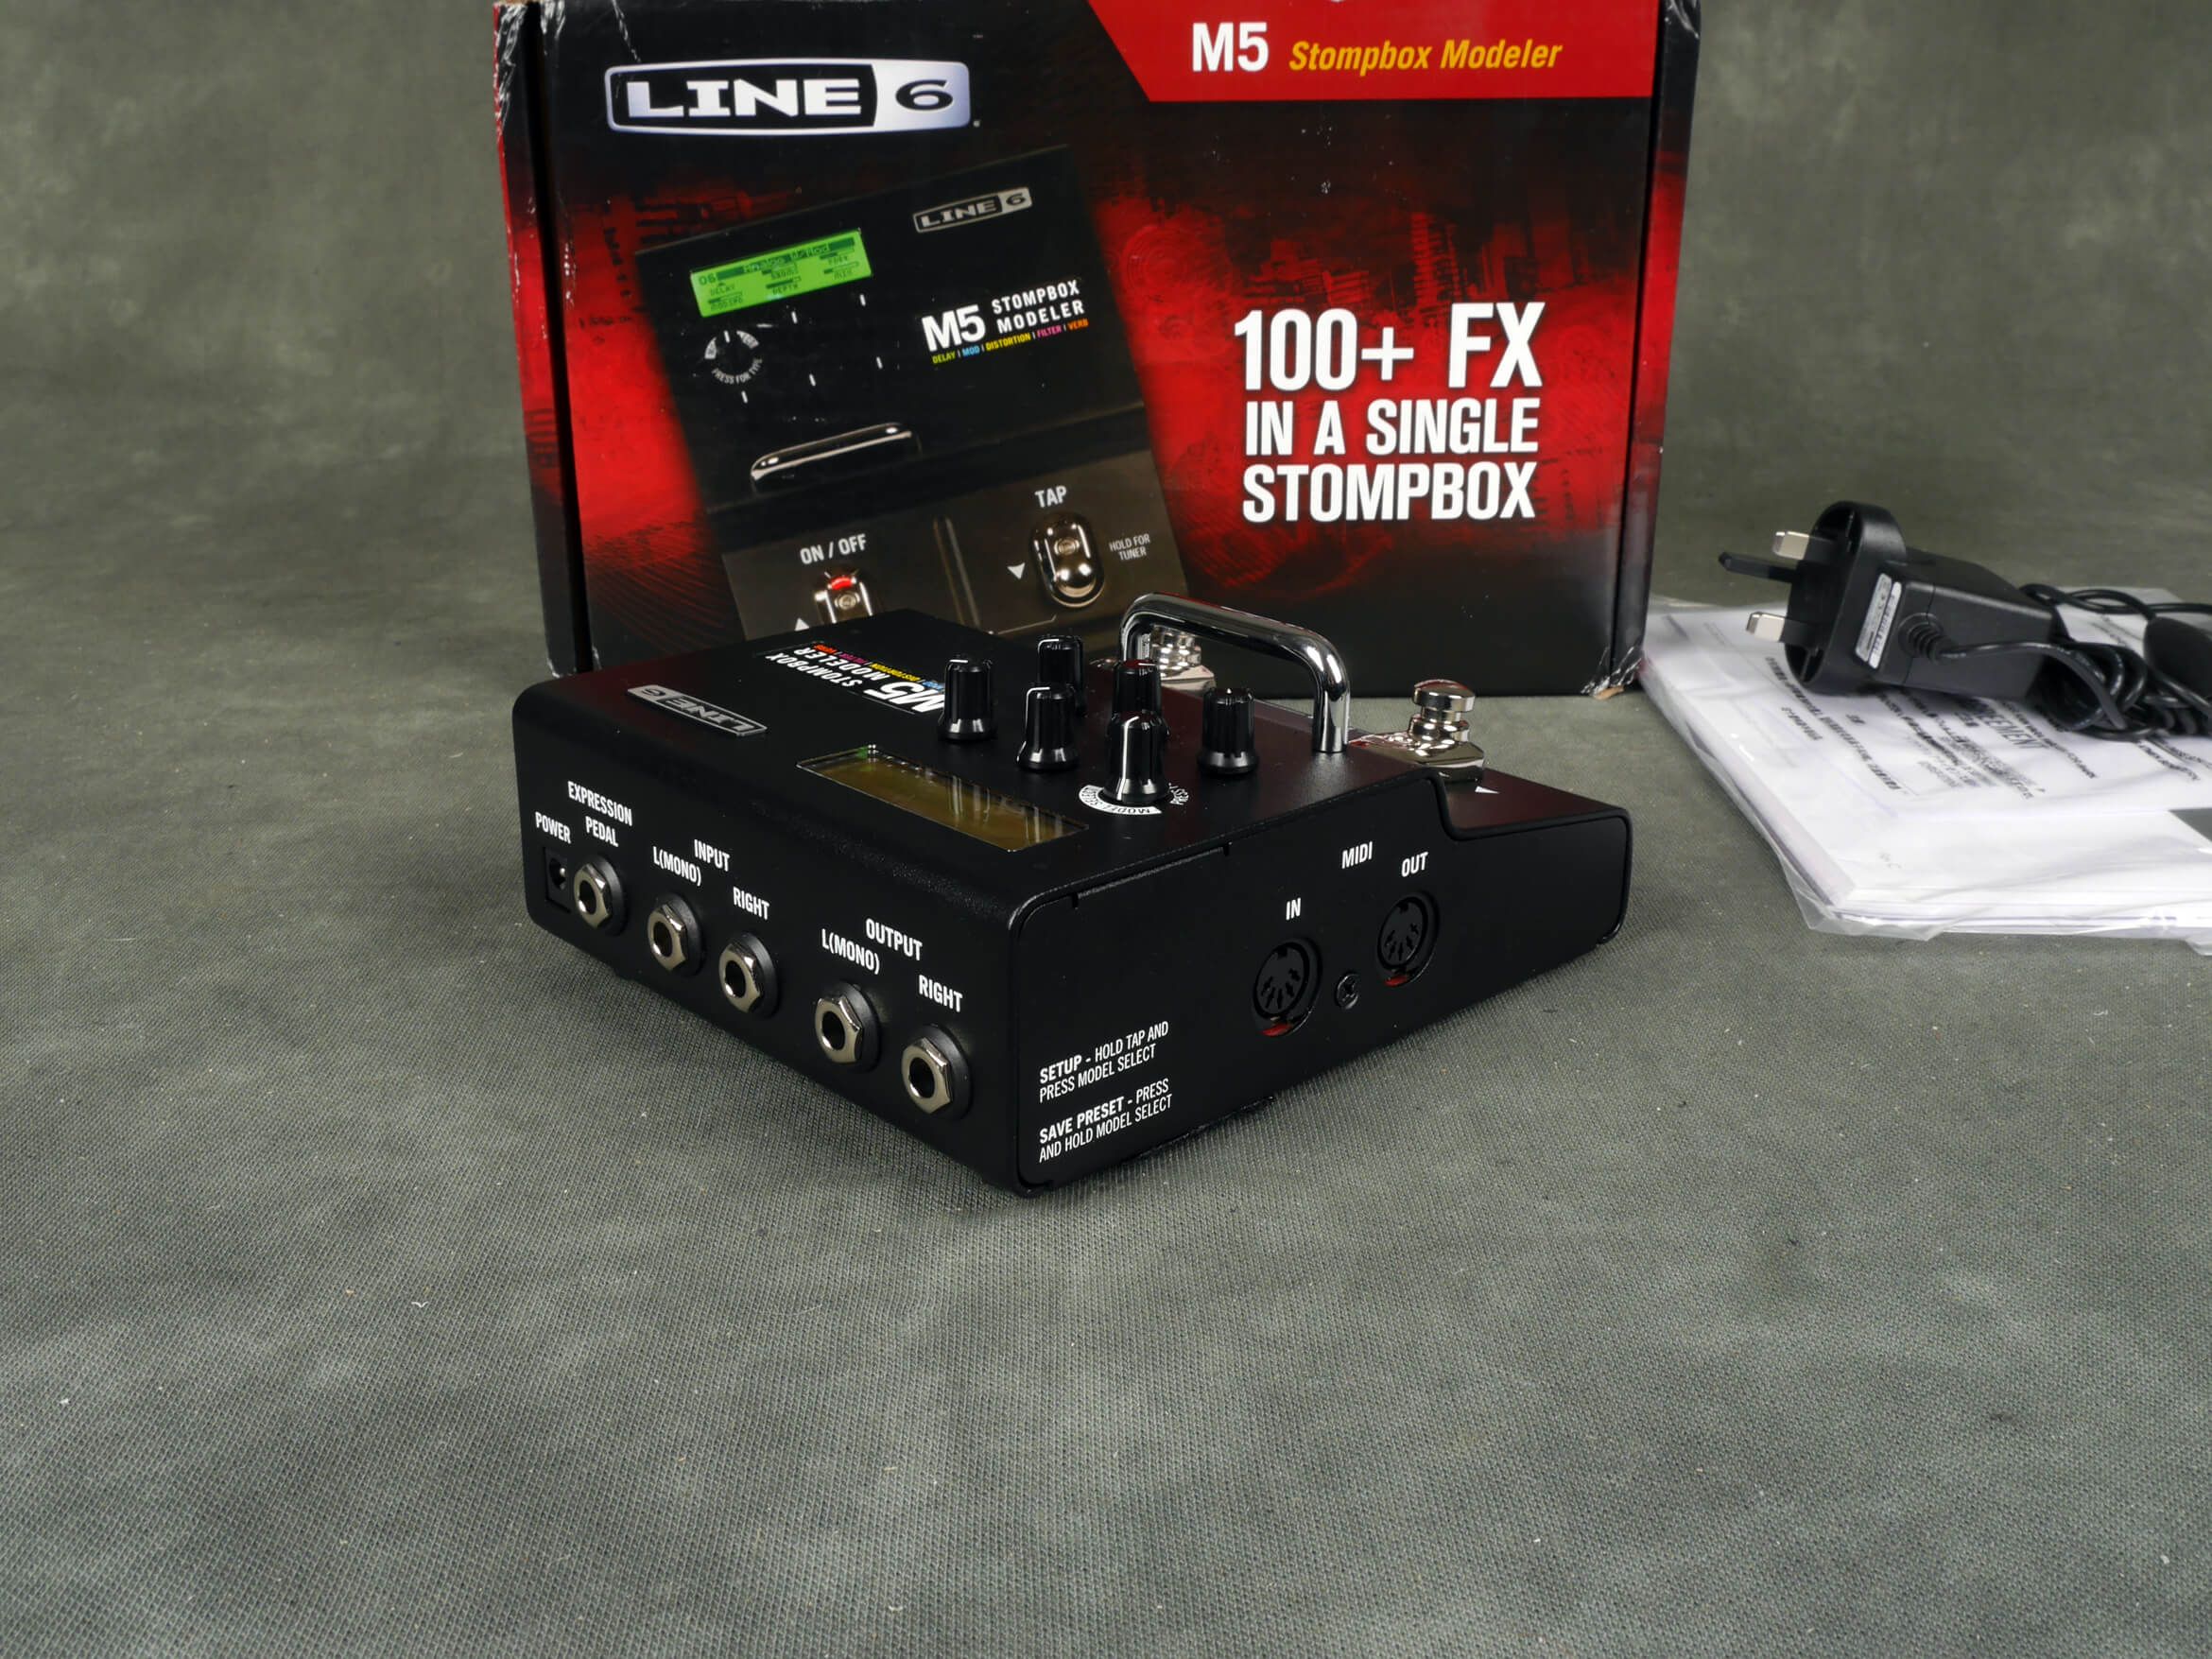 Line 6 M5 Stompbox Modeler Multi Effects FX Pedal w/Box & PSU - 2nd